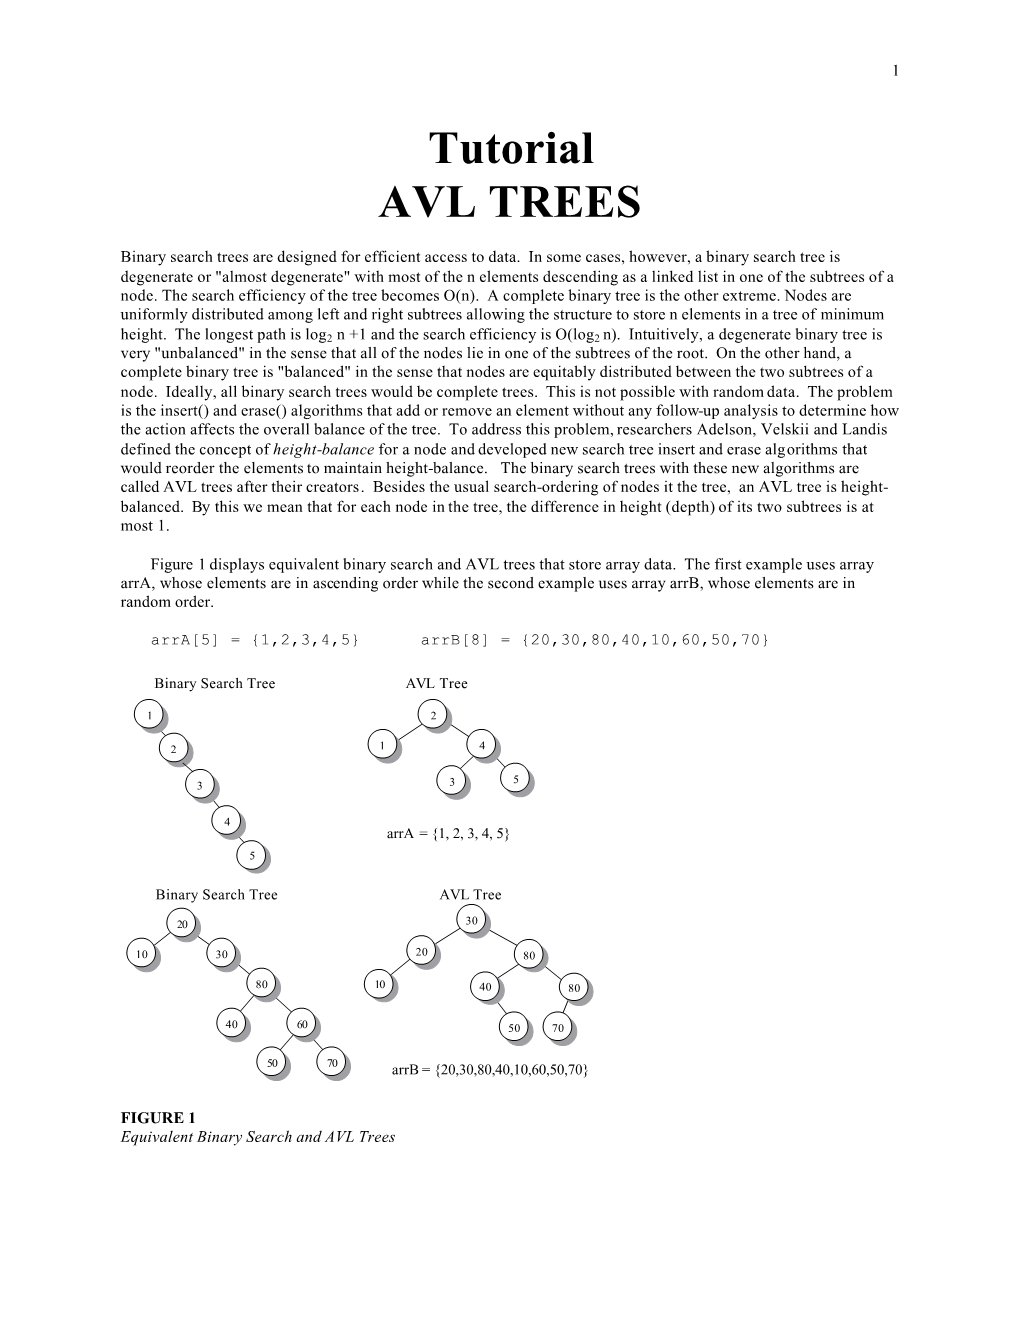 Tutorial AVL TREES